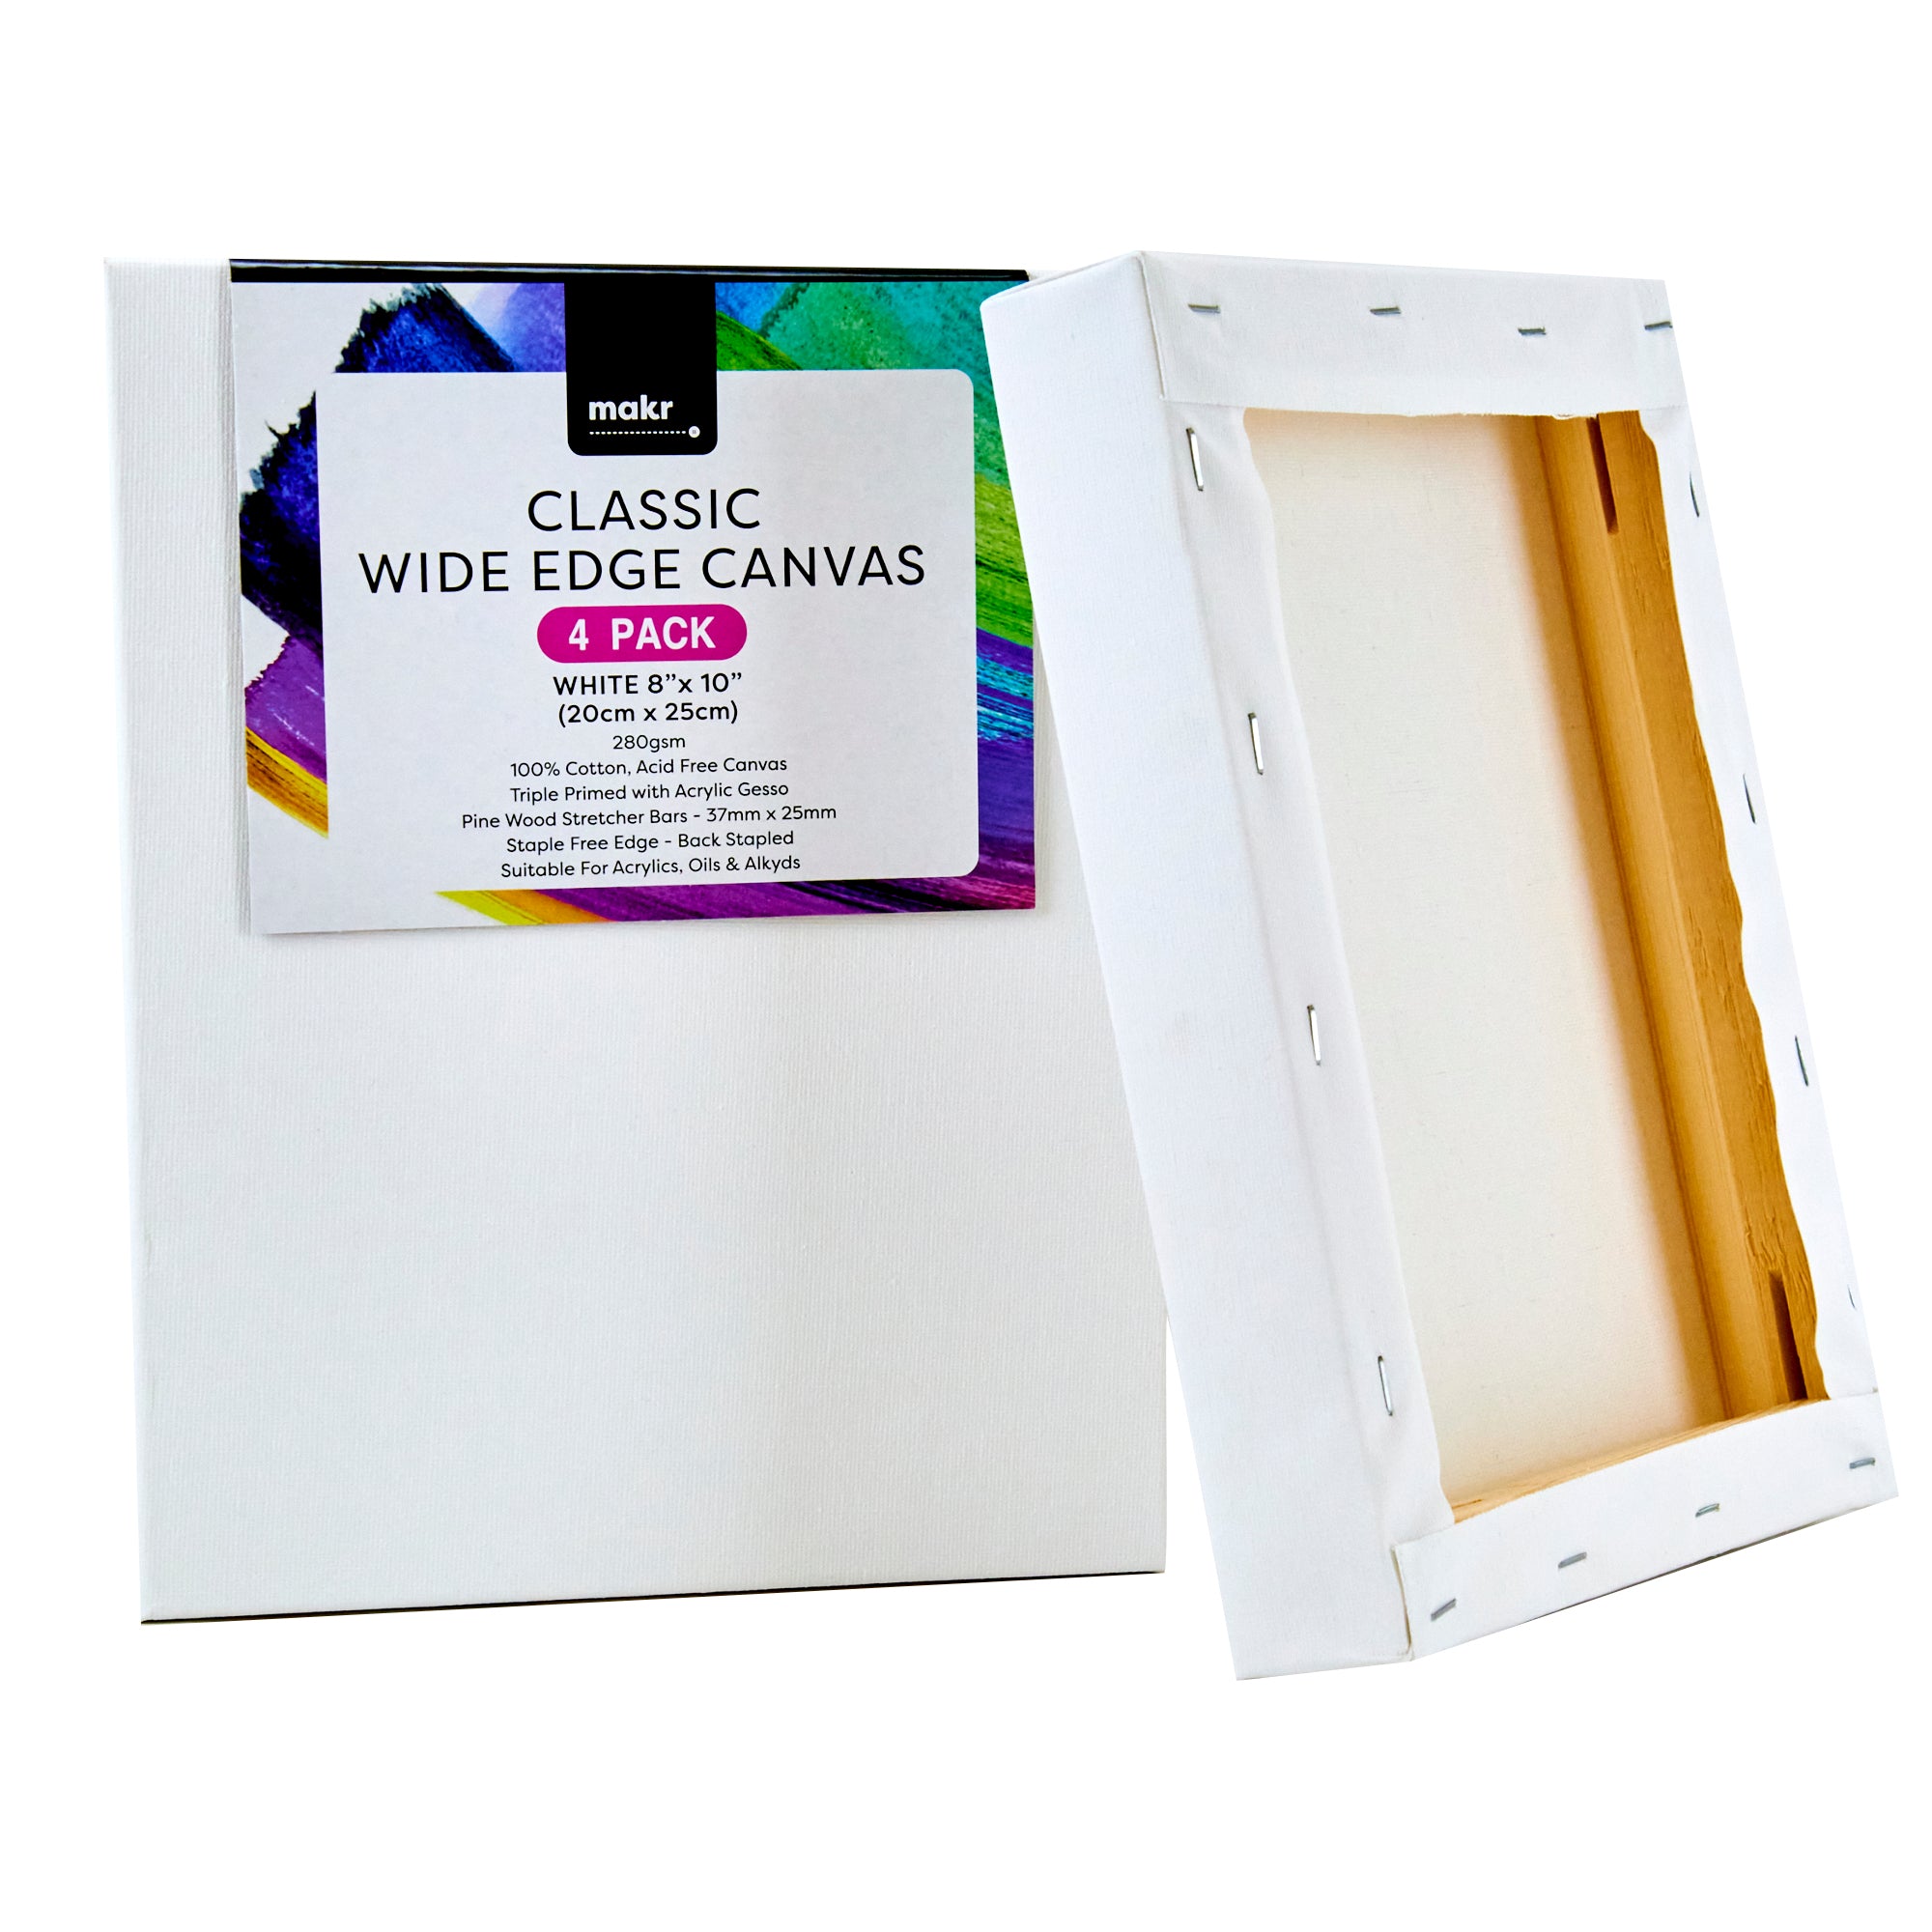 20cm x 25cm Framed Canvas - Blank Plain Stretched For Oils & Acrylics